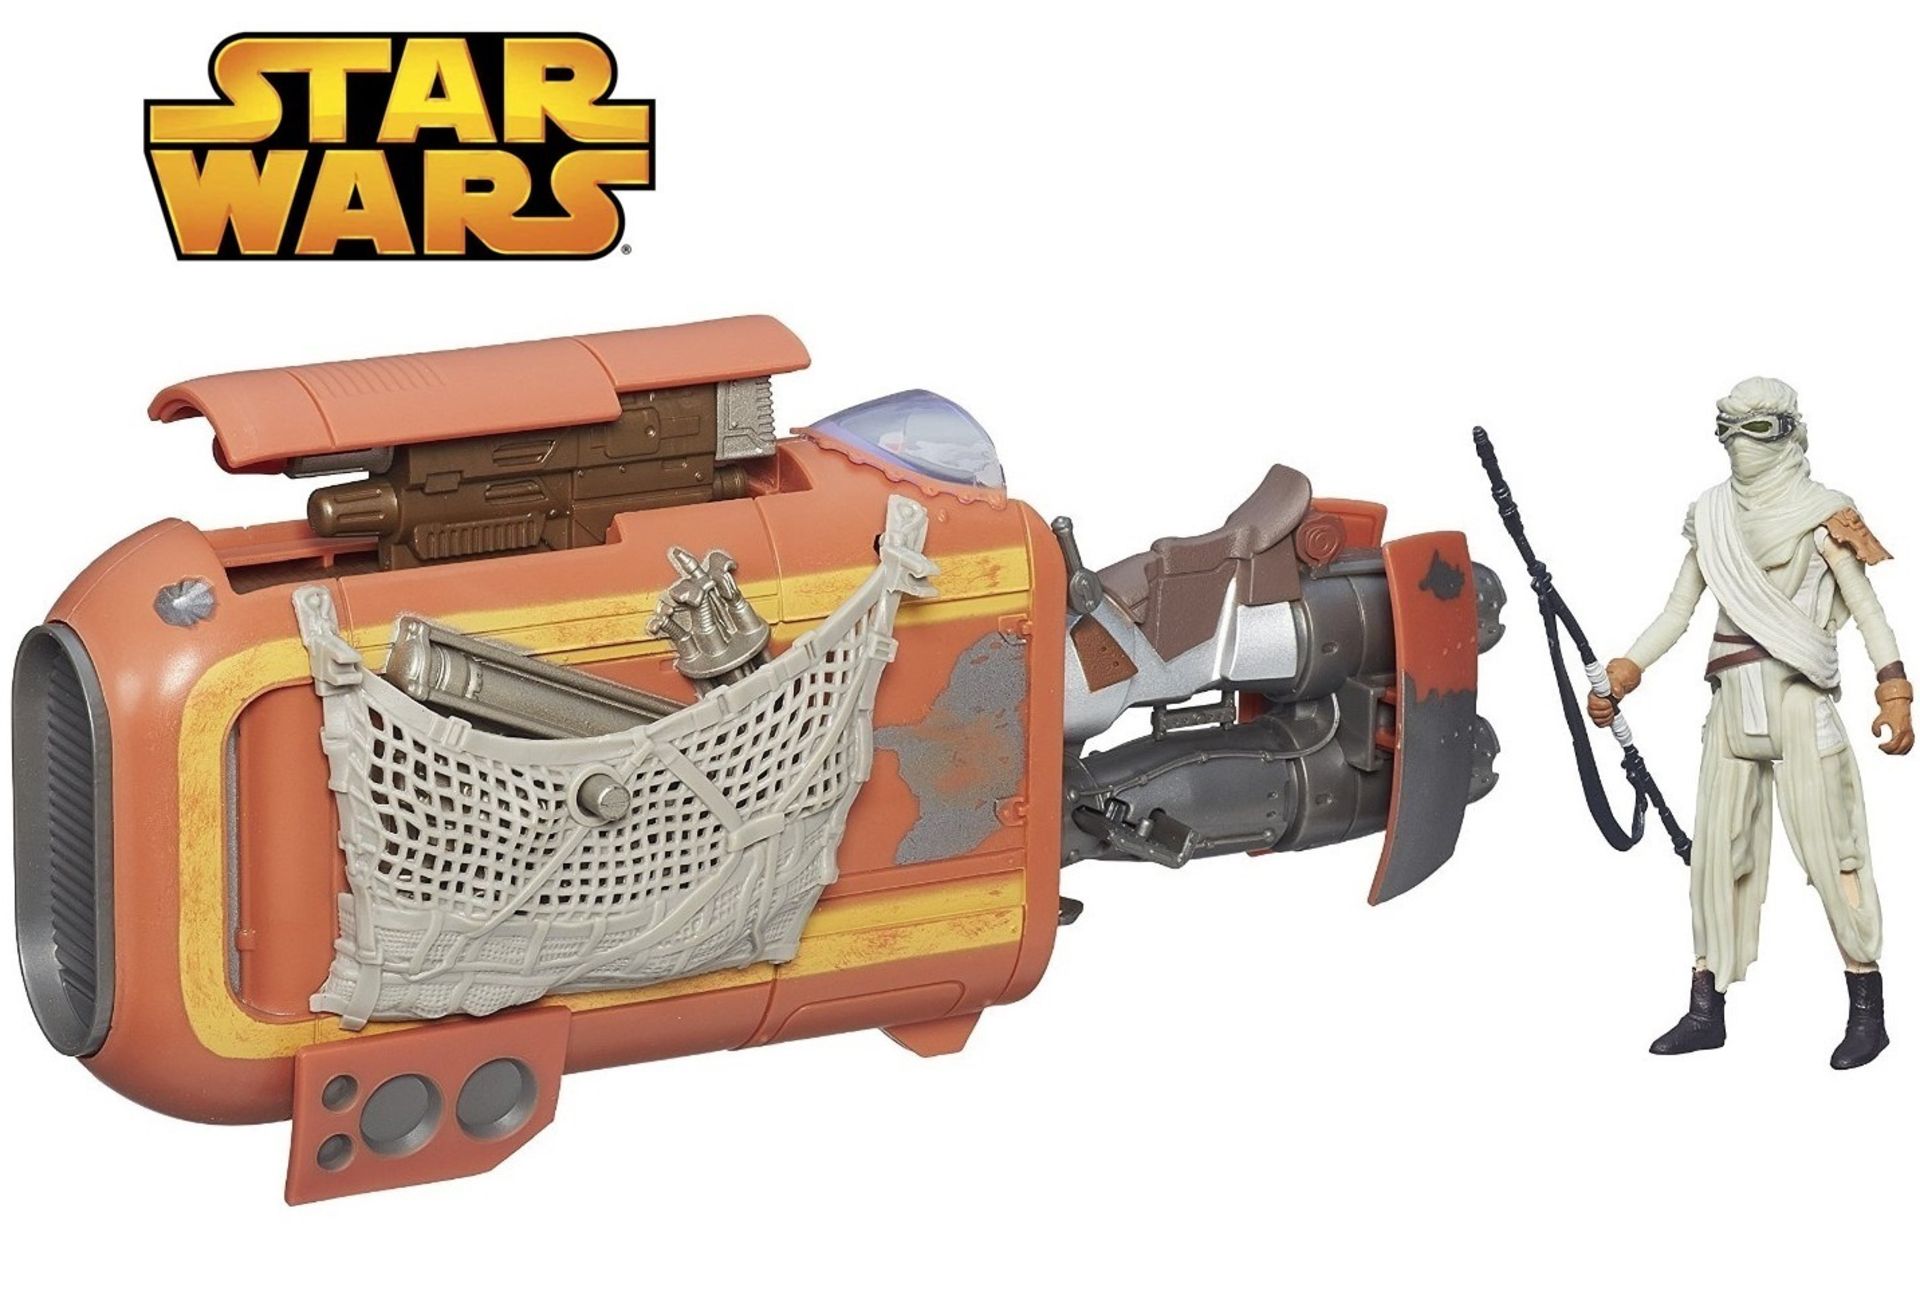 V *TRADE QTY* Brand New Hasbro Star Wars Rey's Speeder (Jakku) With Firing Missiles eBay £29.95 X